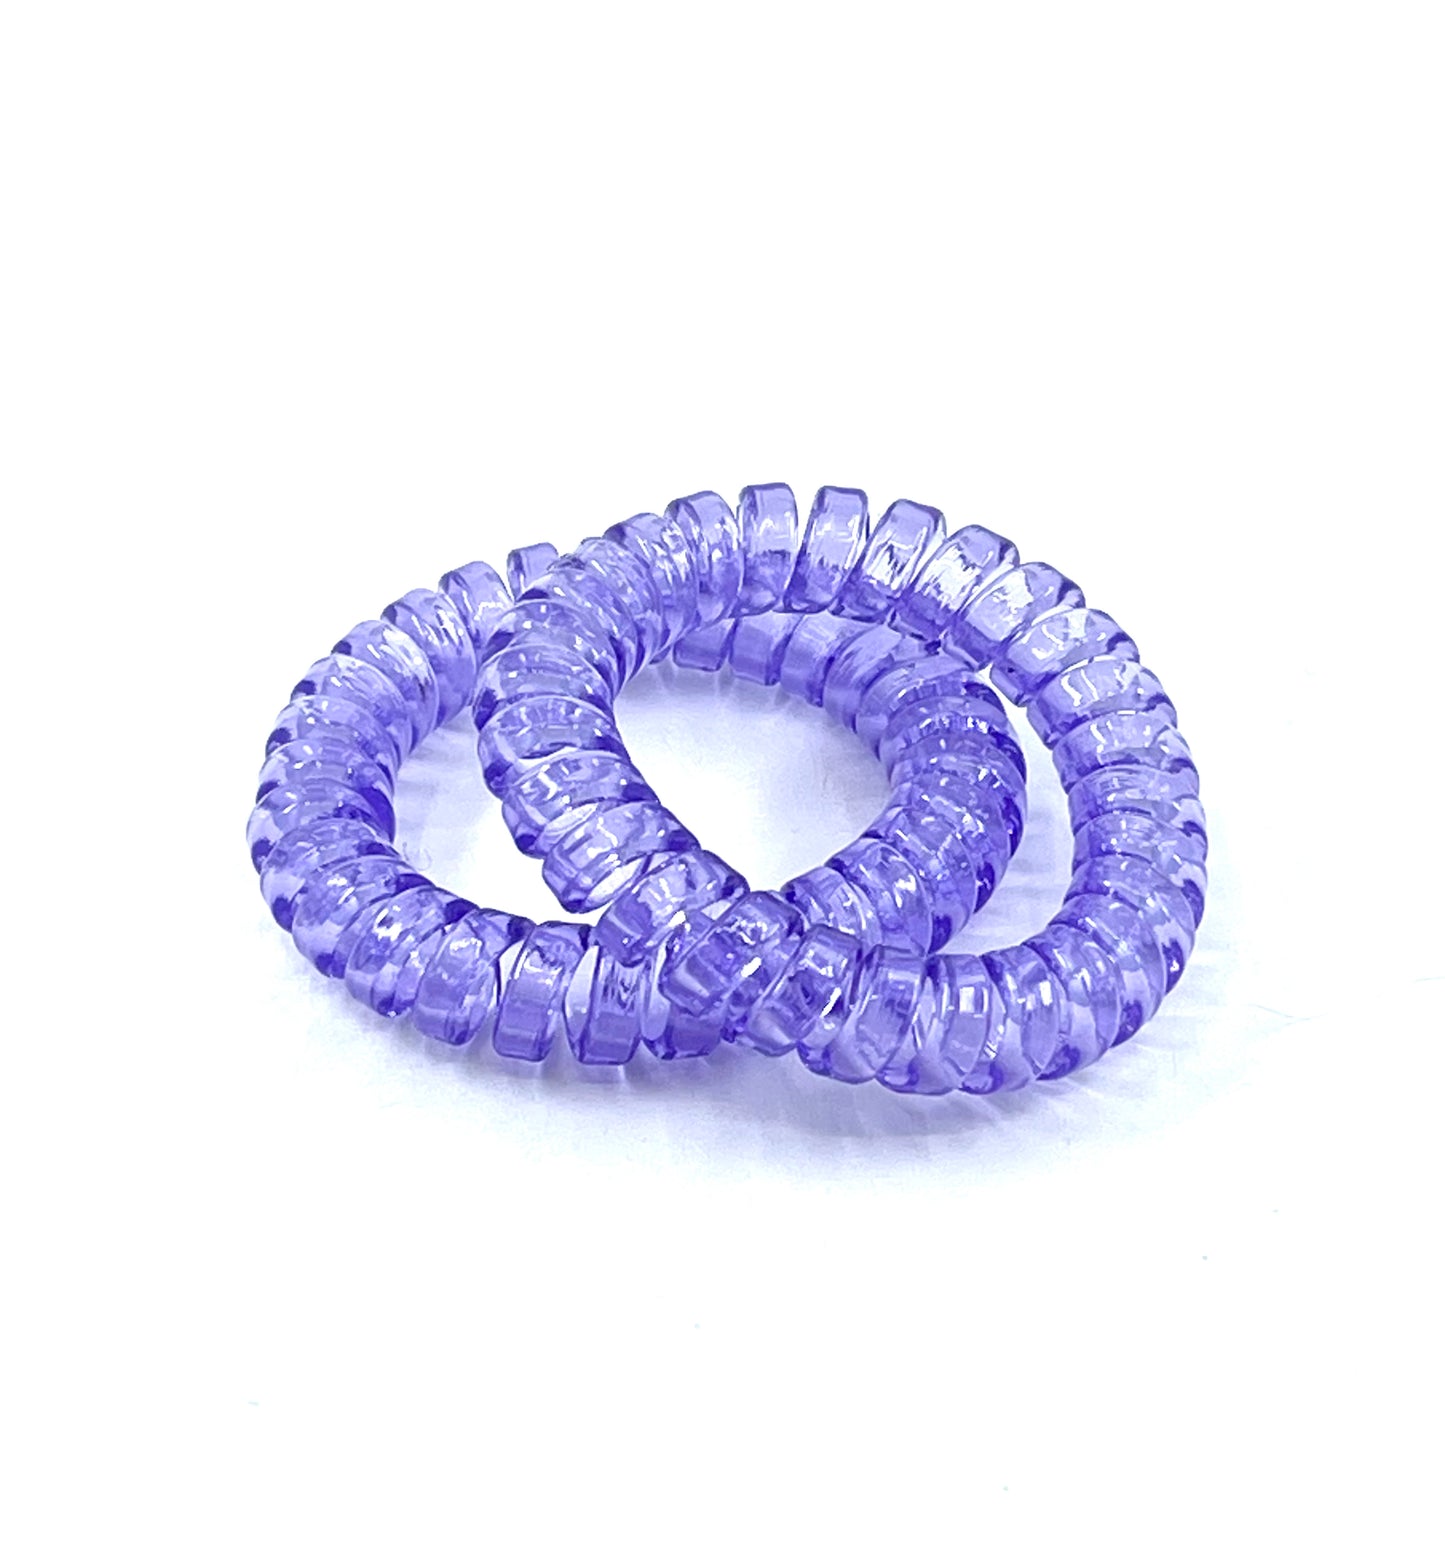 Large Spiral Hair Ties - translucent purple